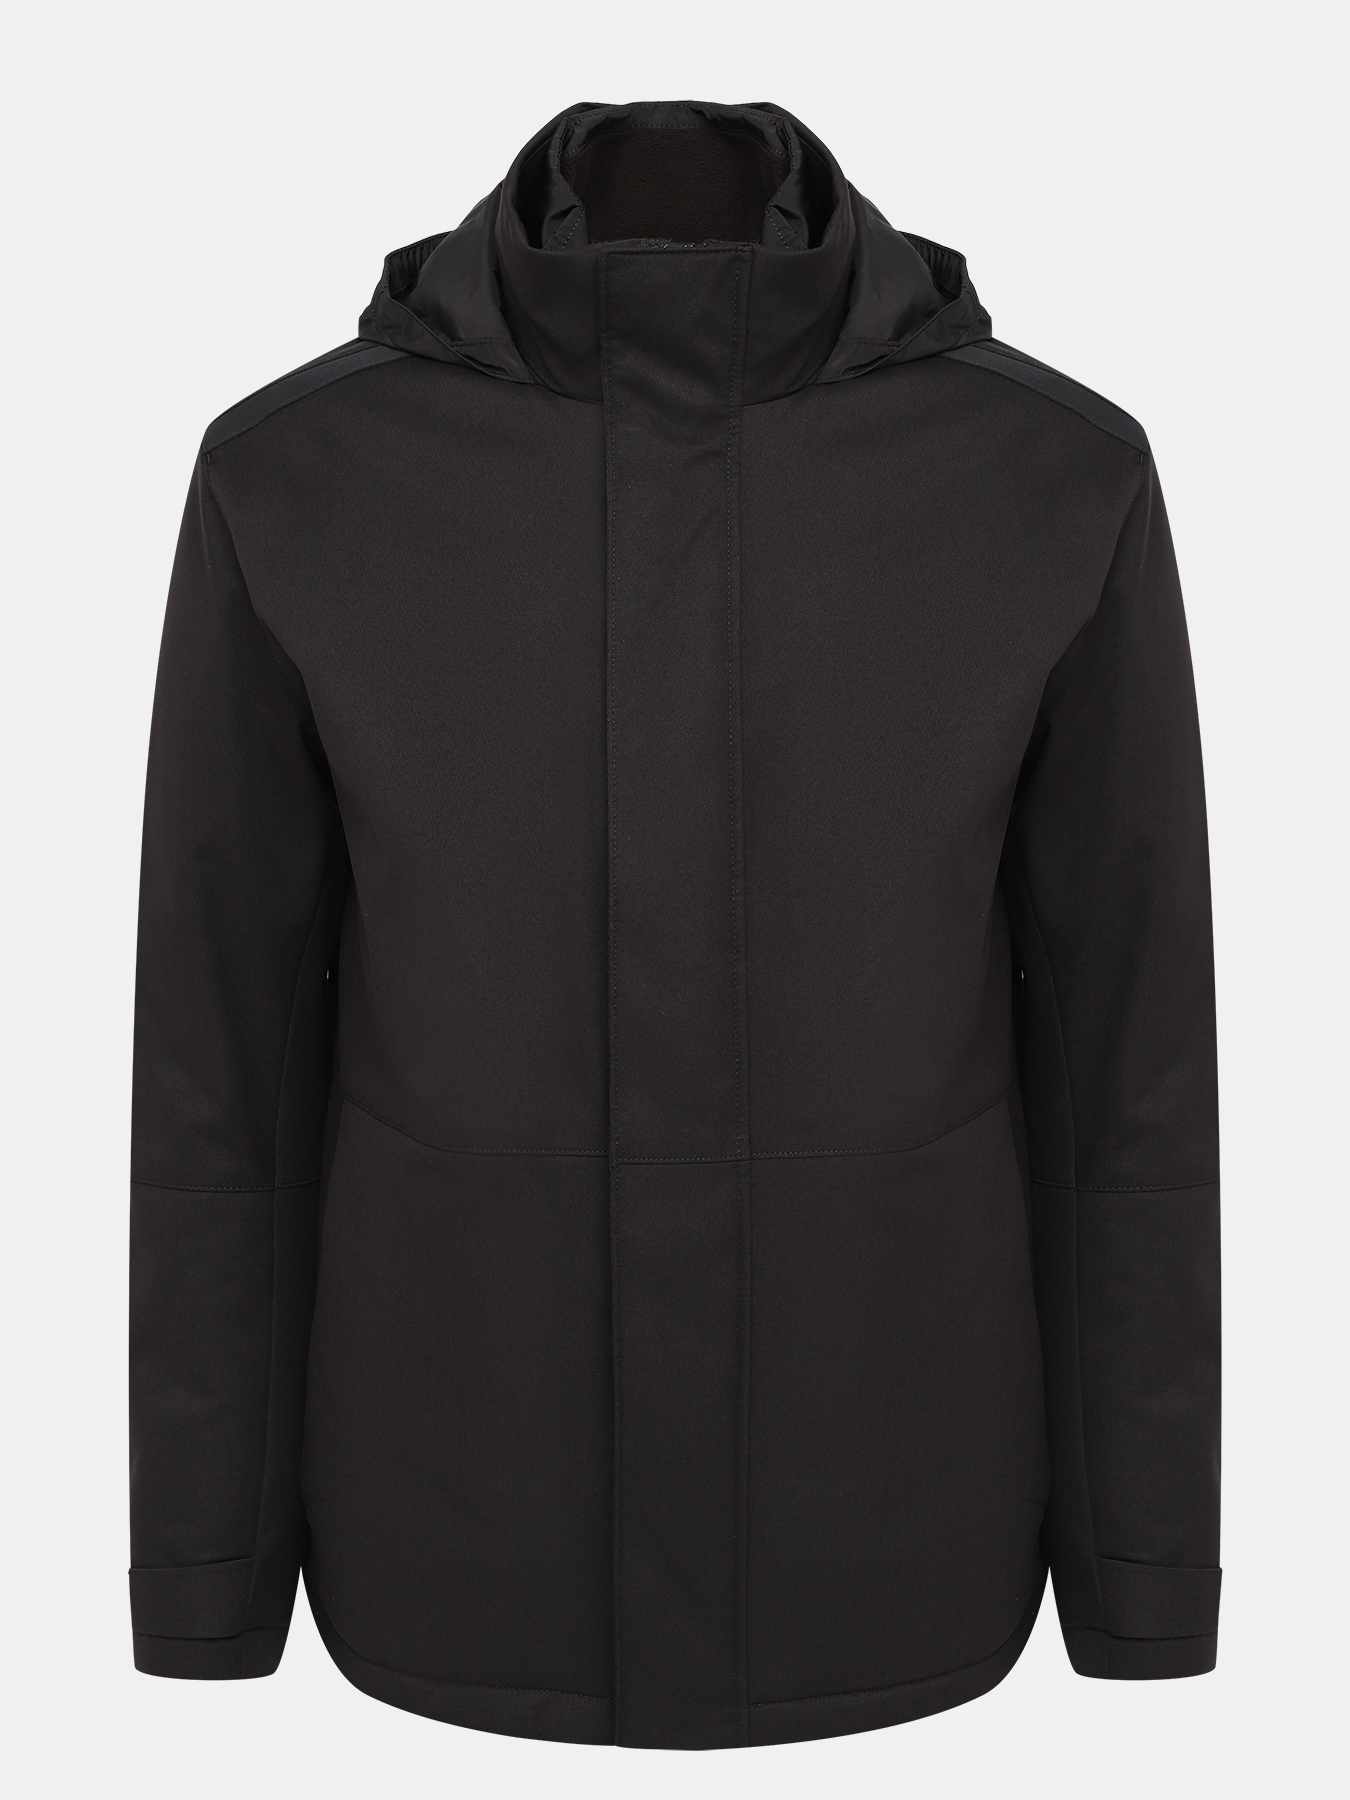 Куртка Cundel BOSS 432012-026, цвет черный, размер 50